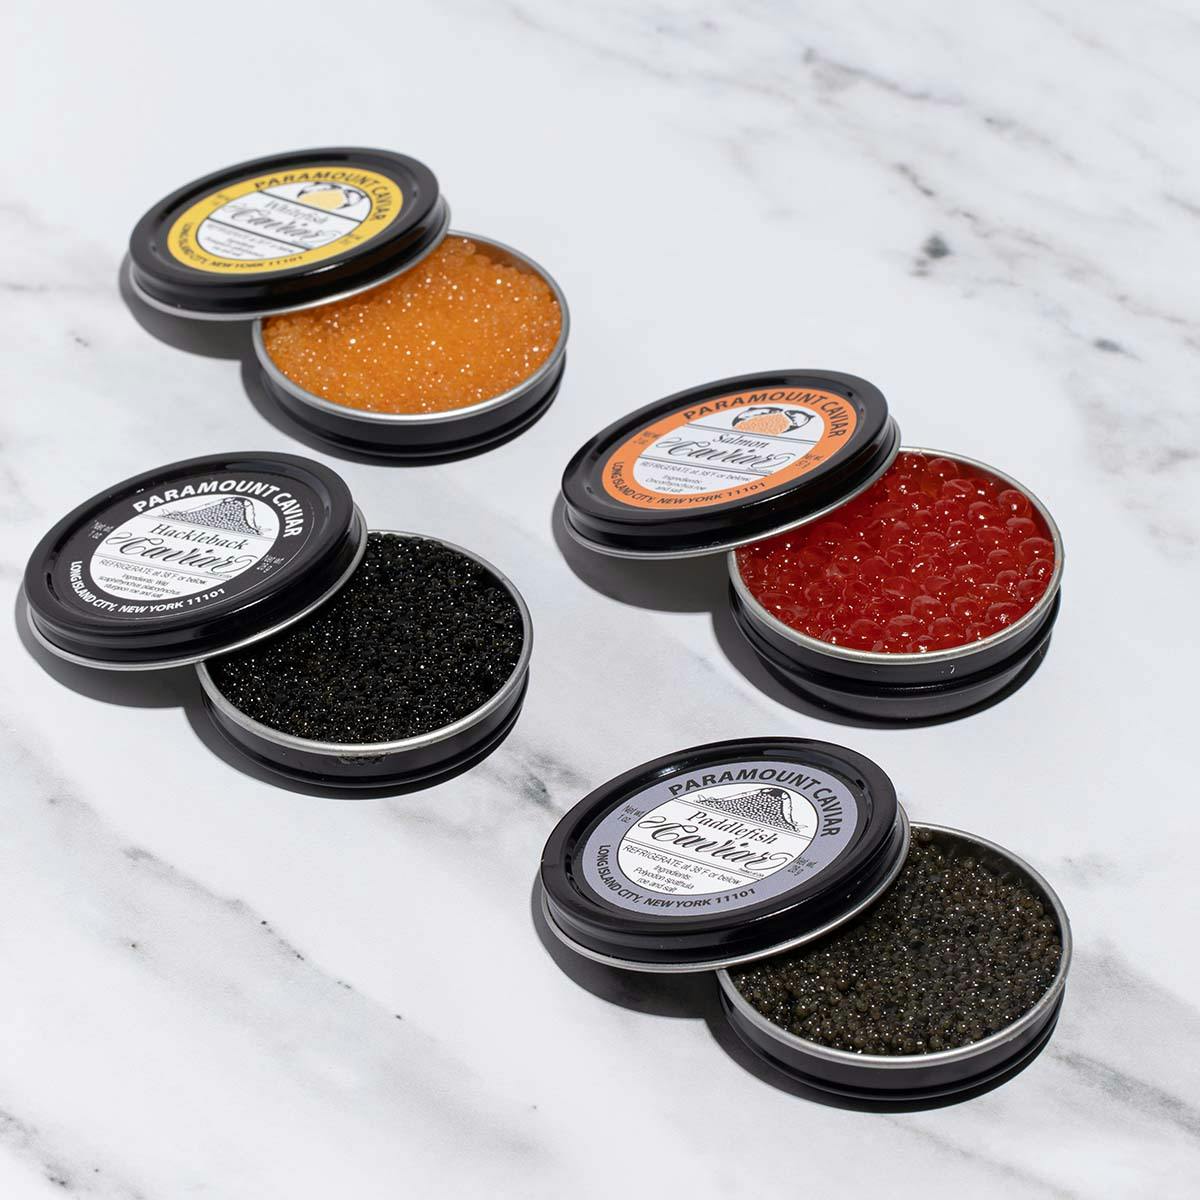 https://goldbelly.imgix.net/uploads/showcase_media_asset/image/190097/Zuckers-Caviar-Tasting-Kit-5.jpg?ixlib=rails-3.0.2